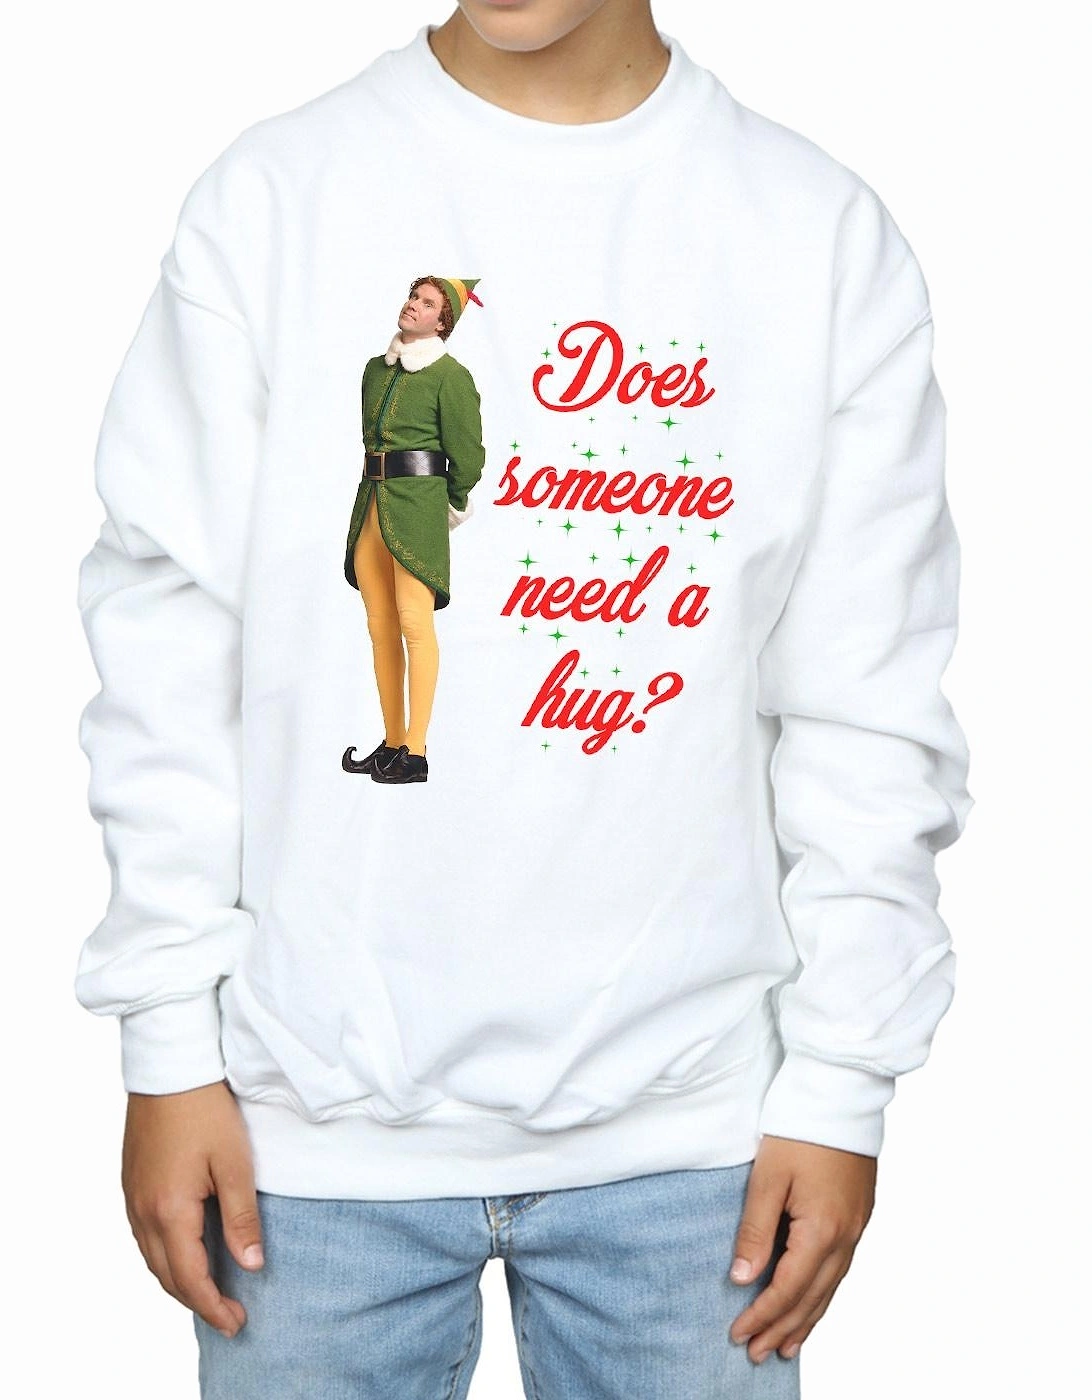 Boys Hug Buddy Sweatshirt